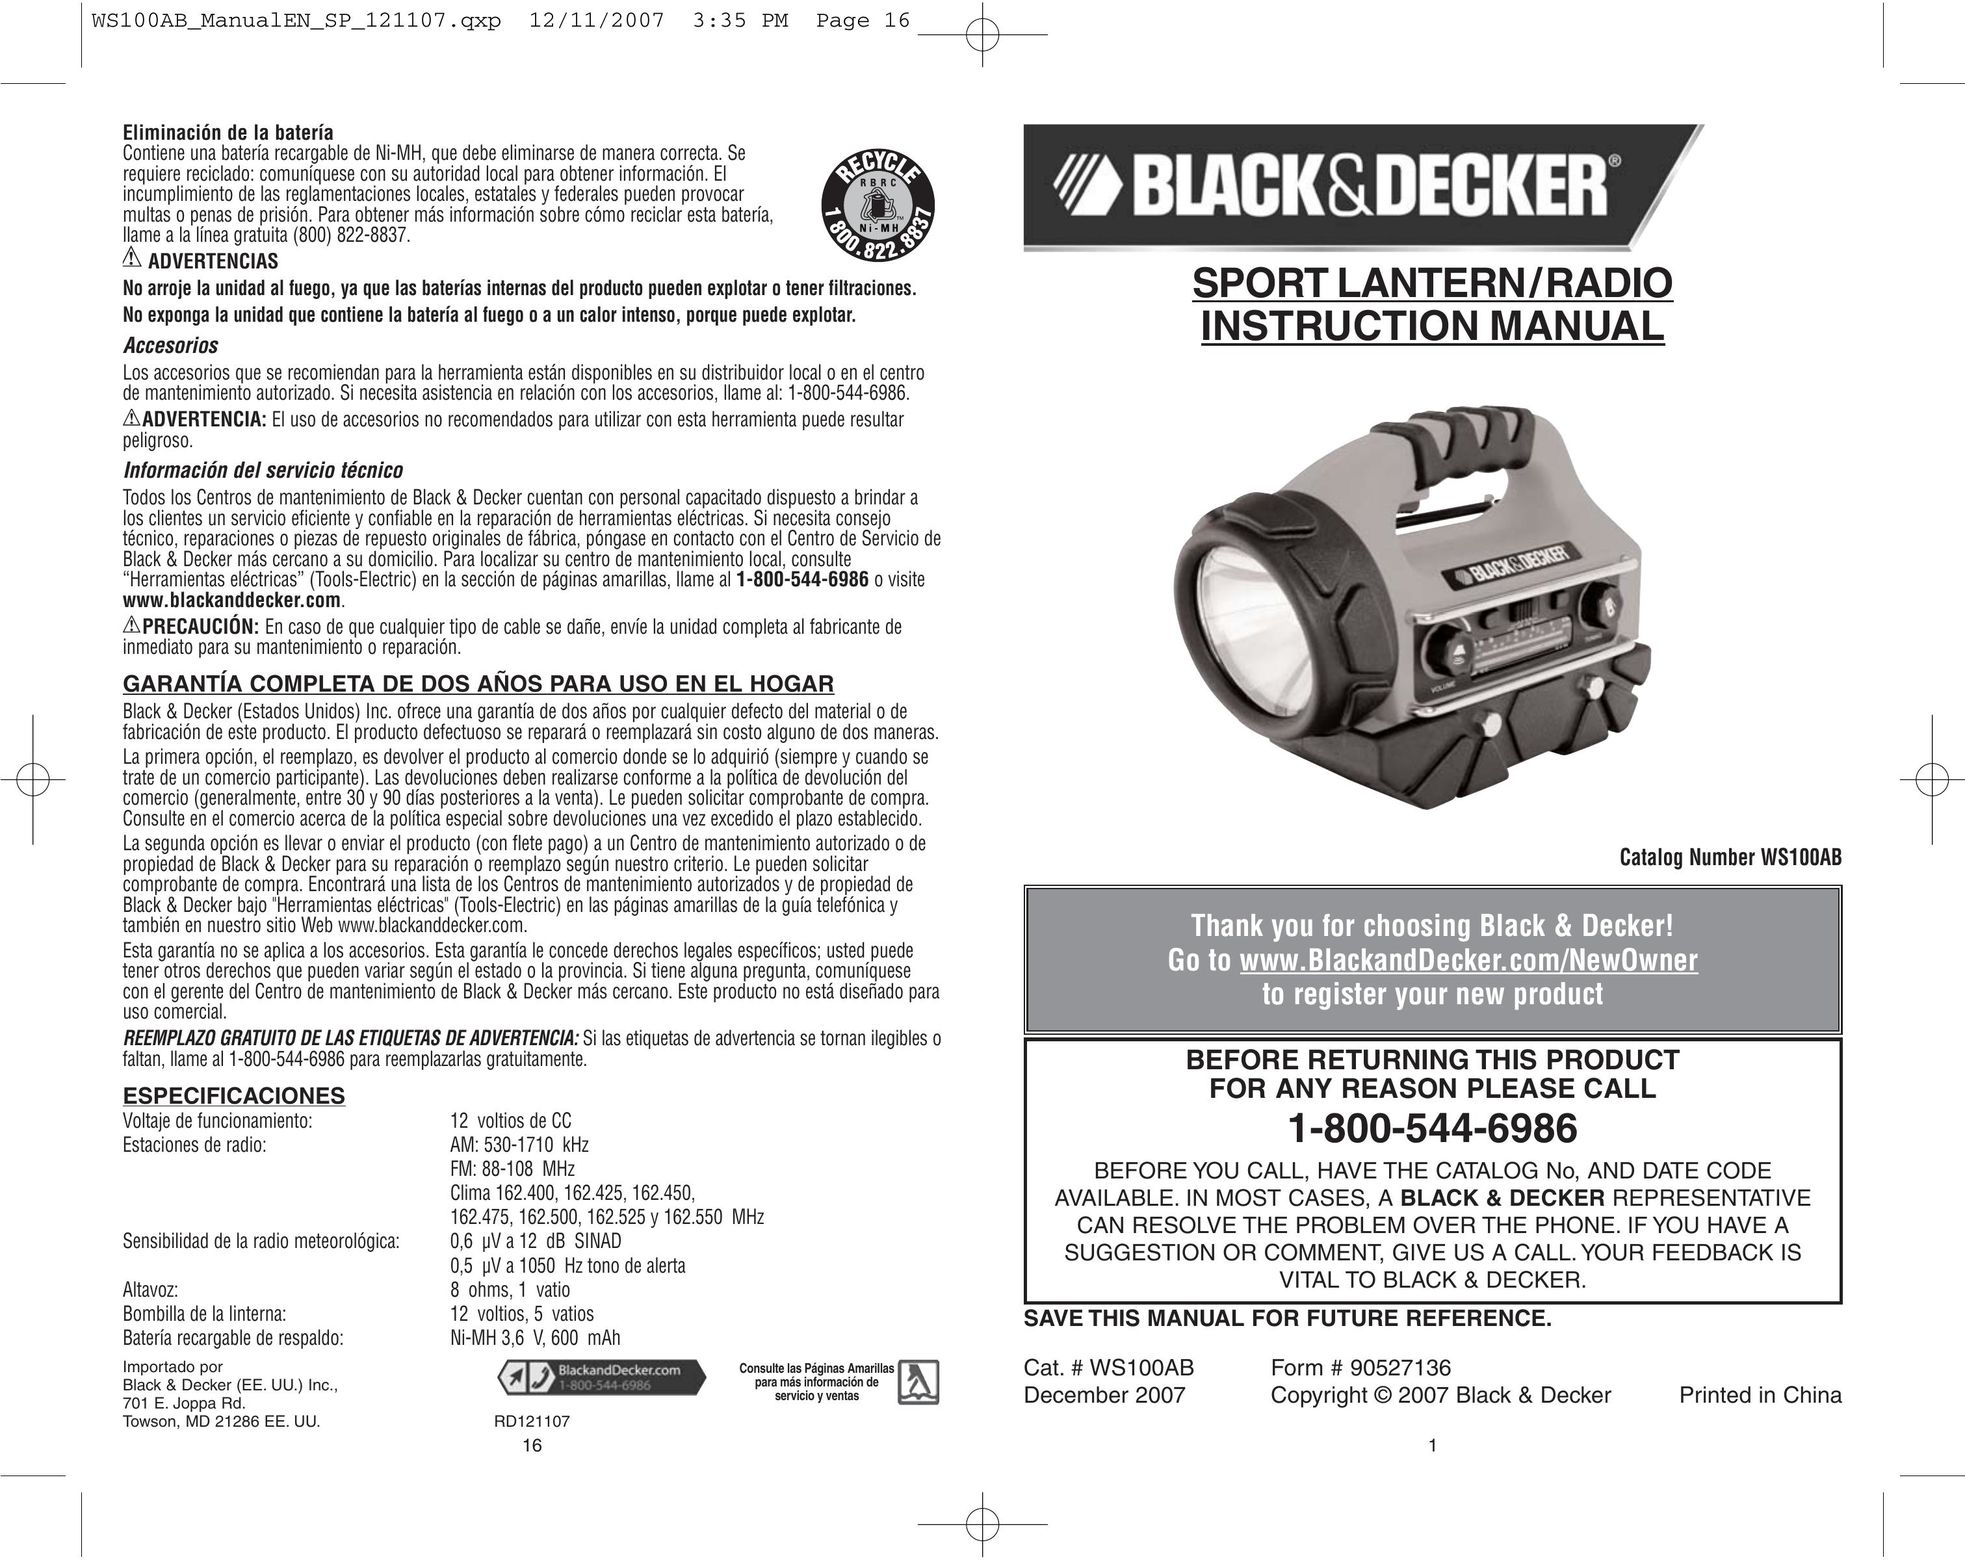 Black & Decker WS100AB Radio User Manual